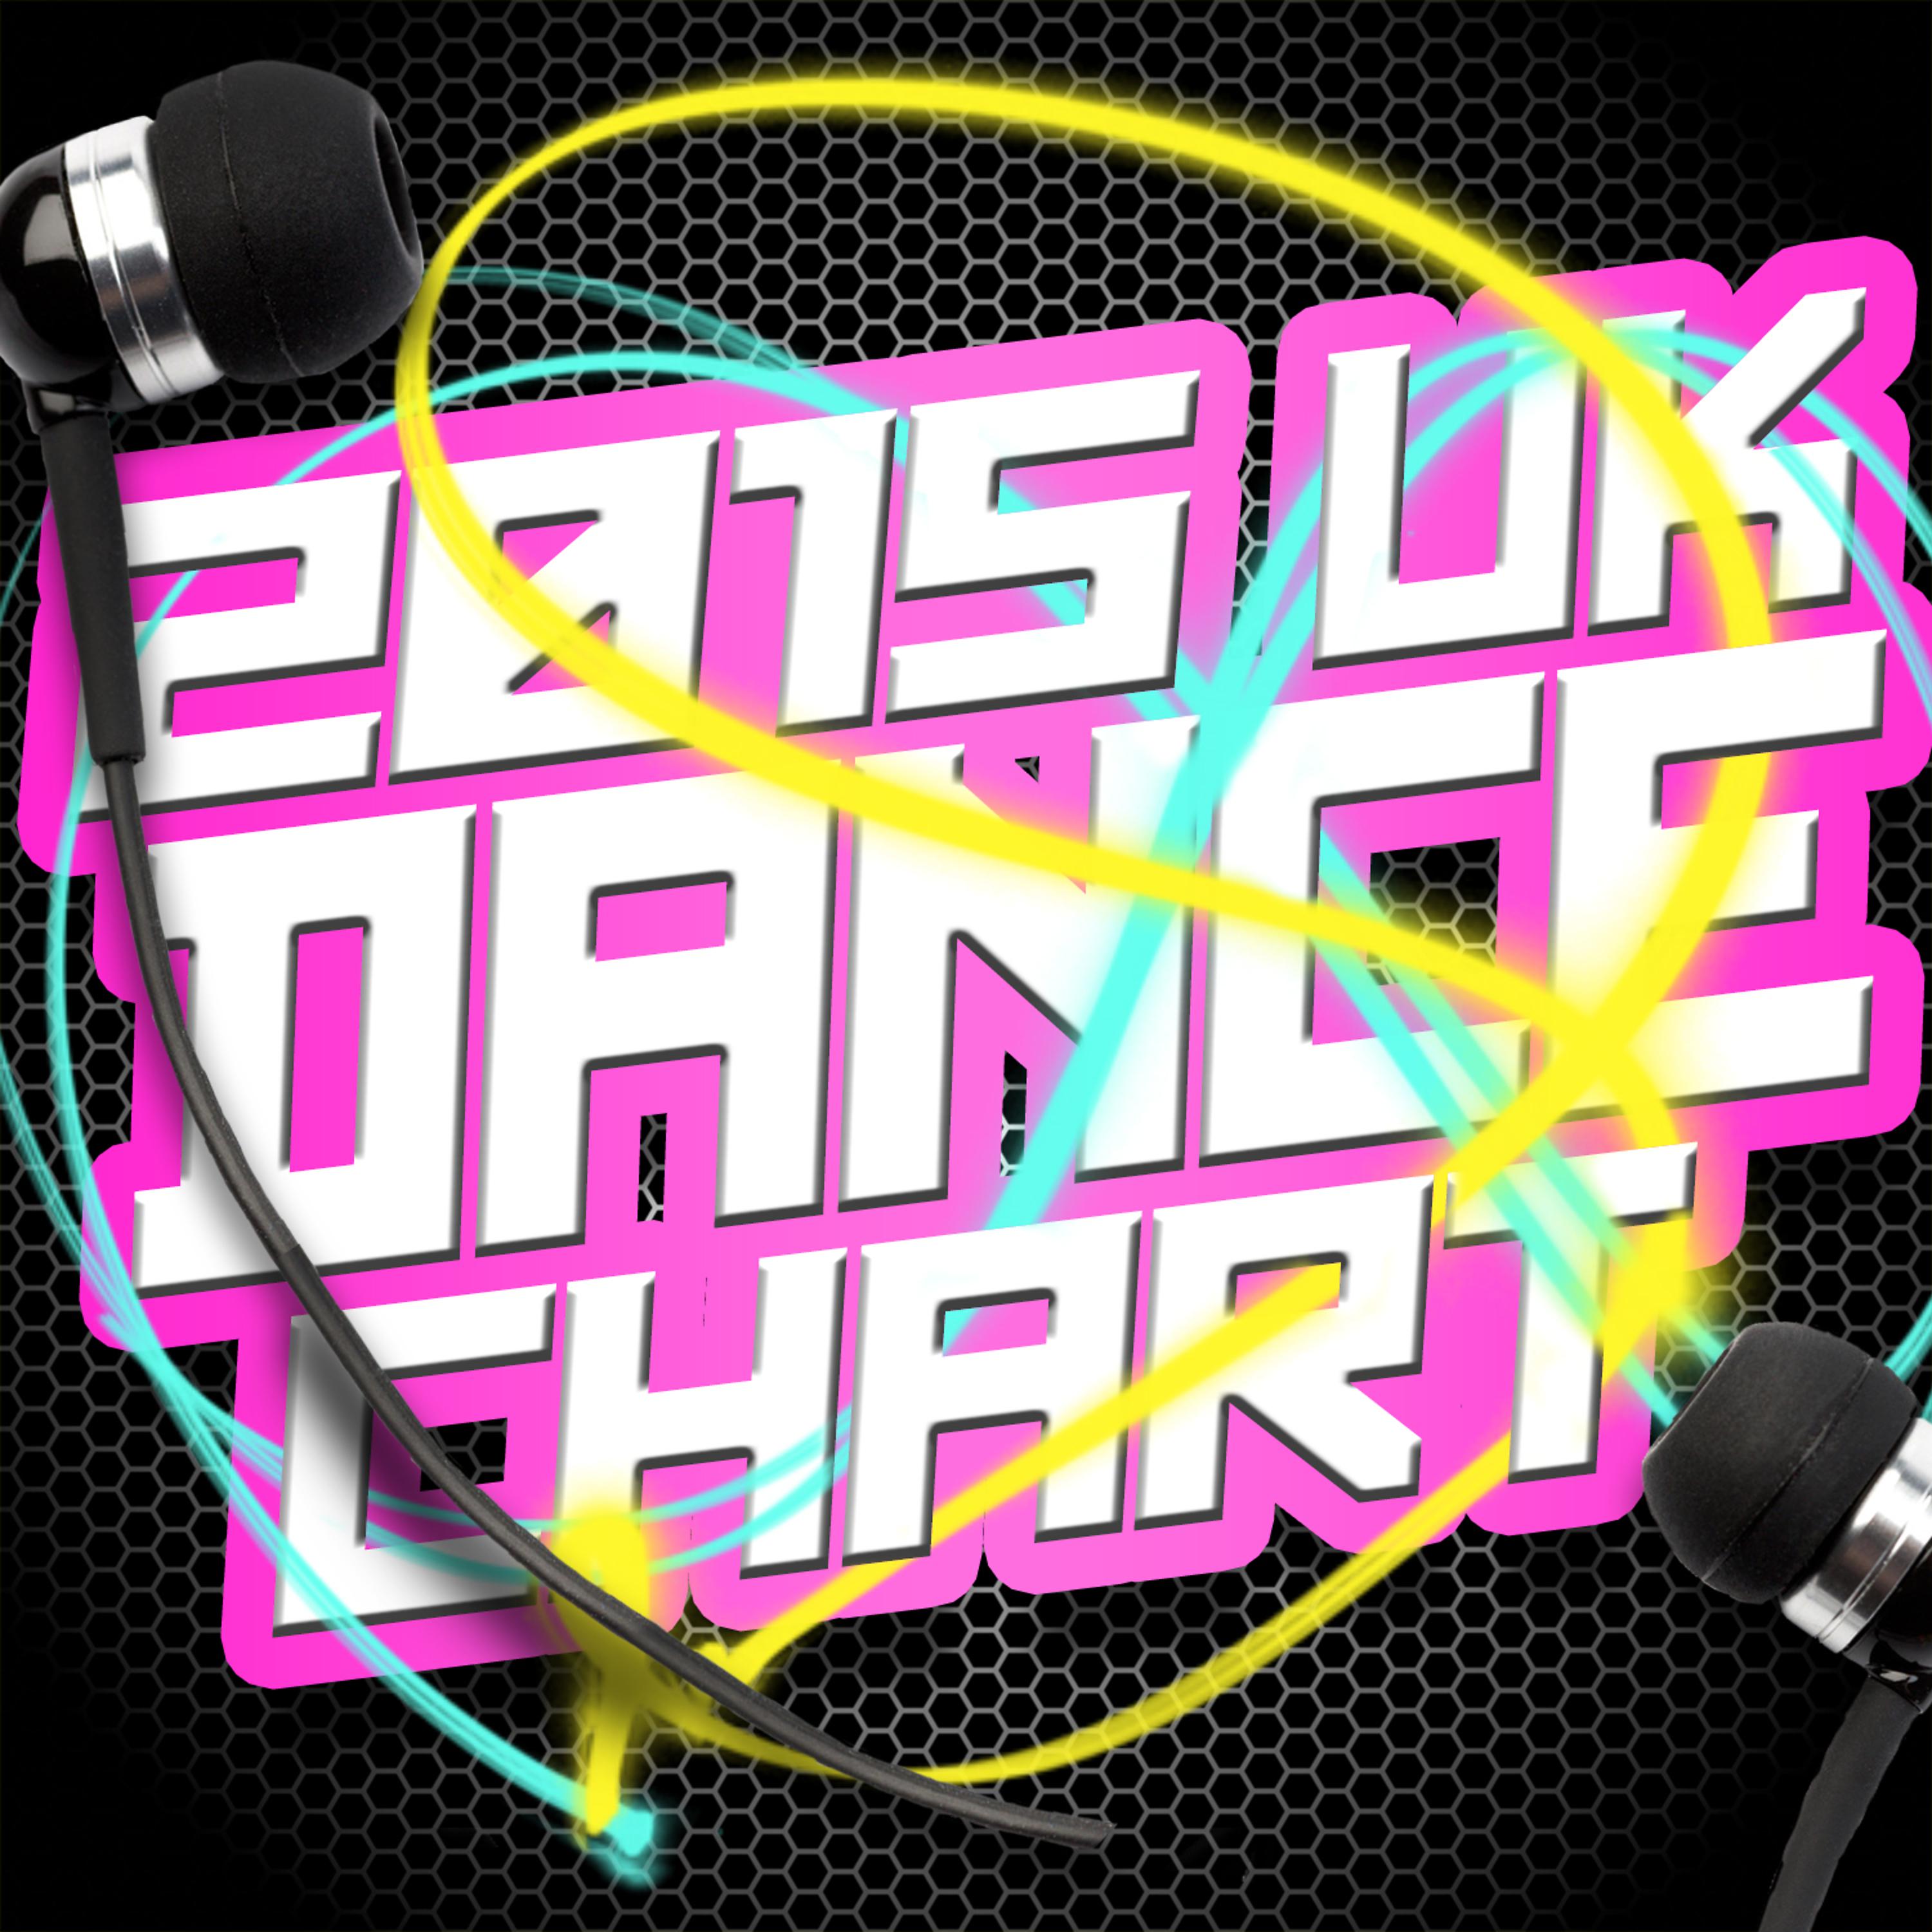 Постер альбома 2015 Uk Dance Chart